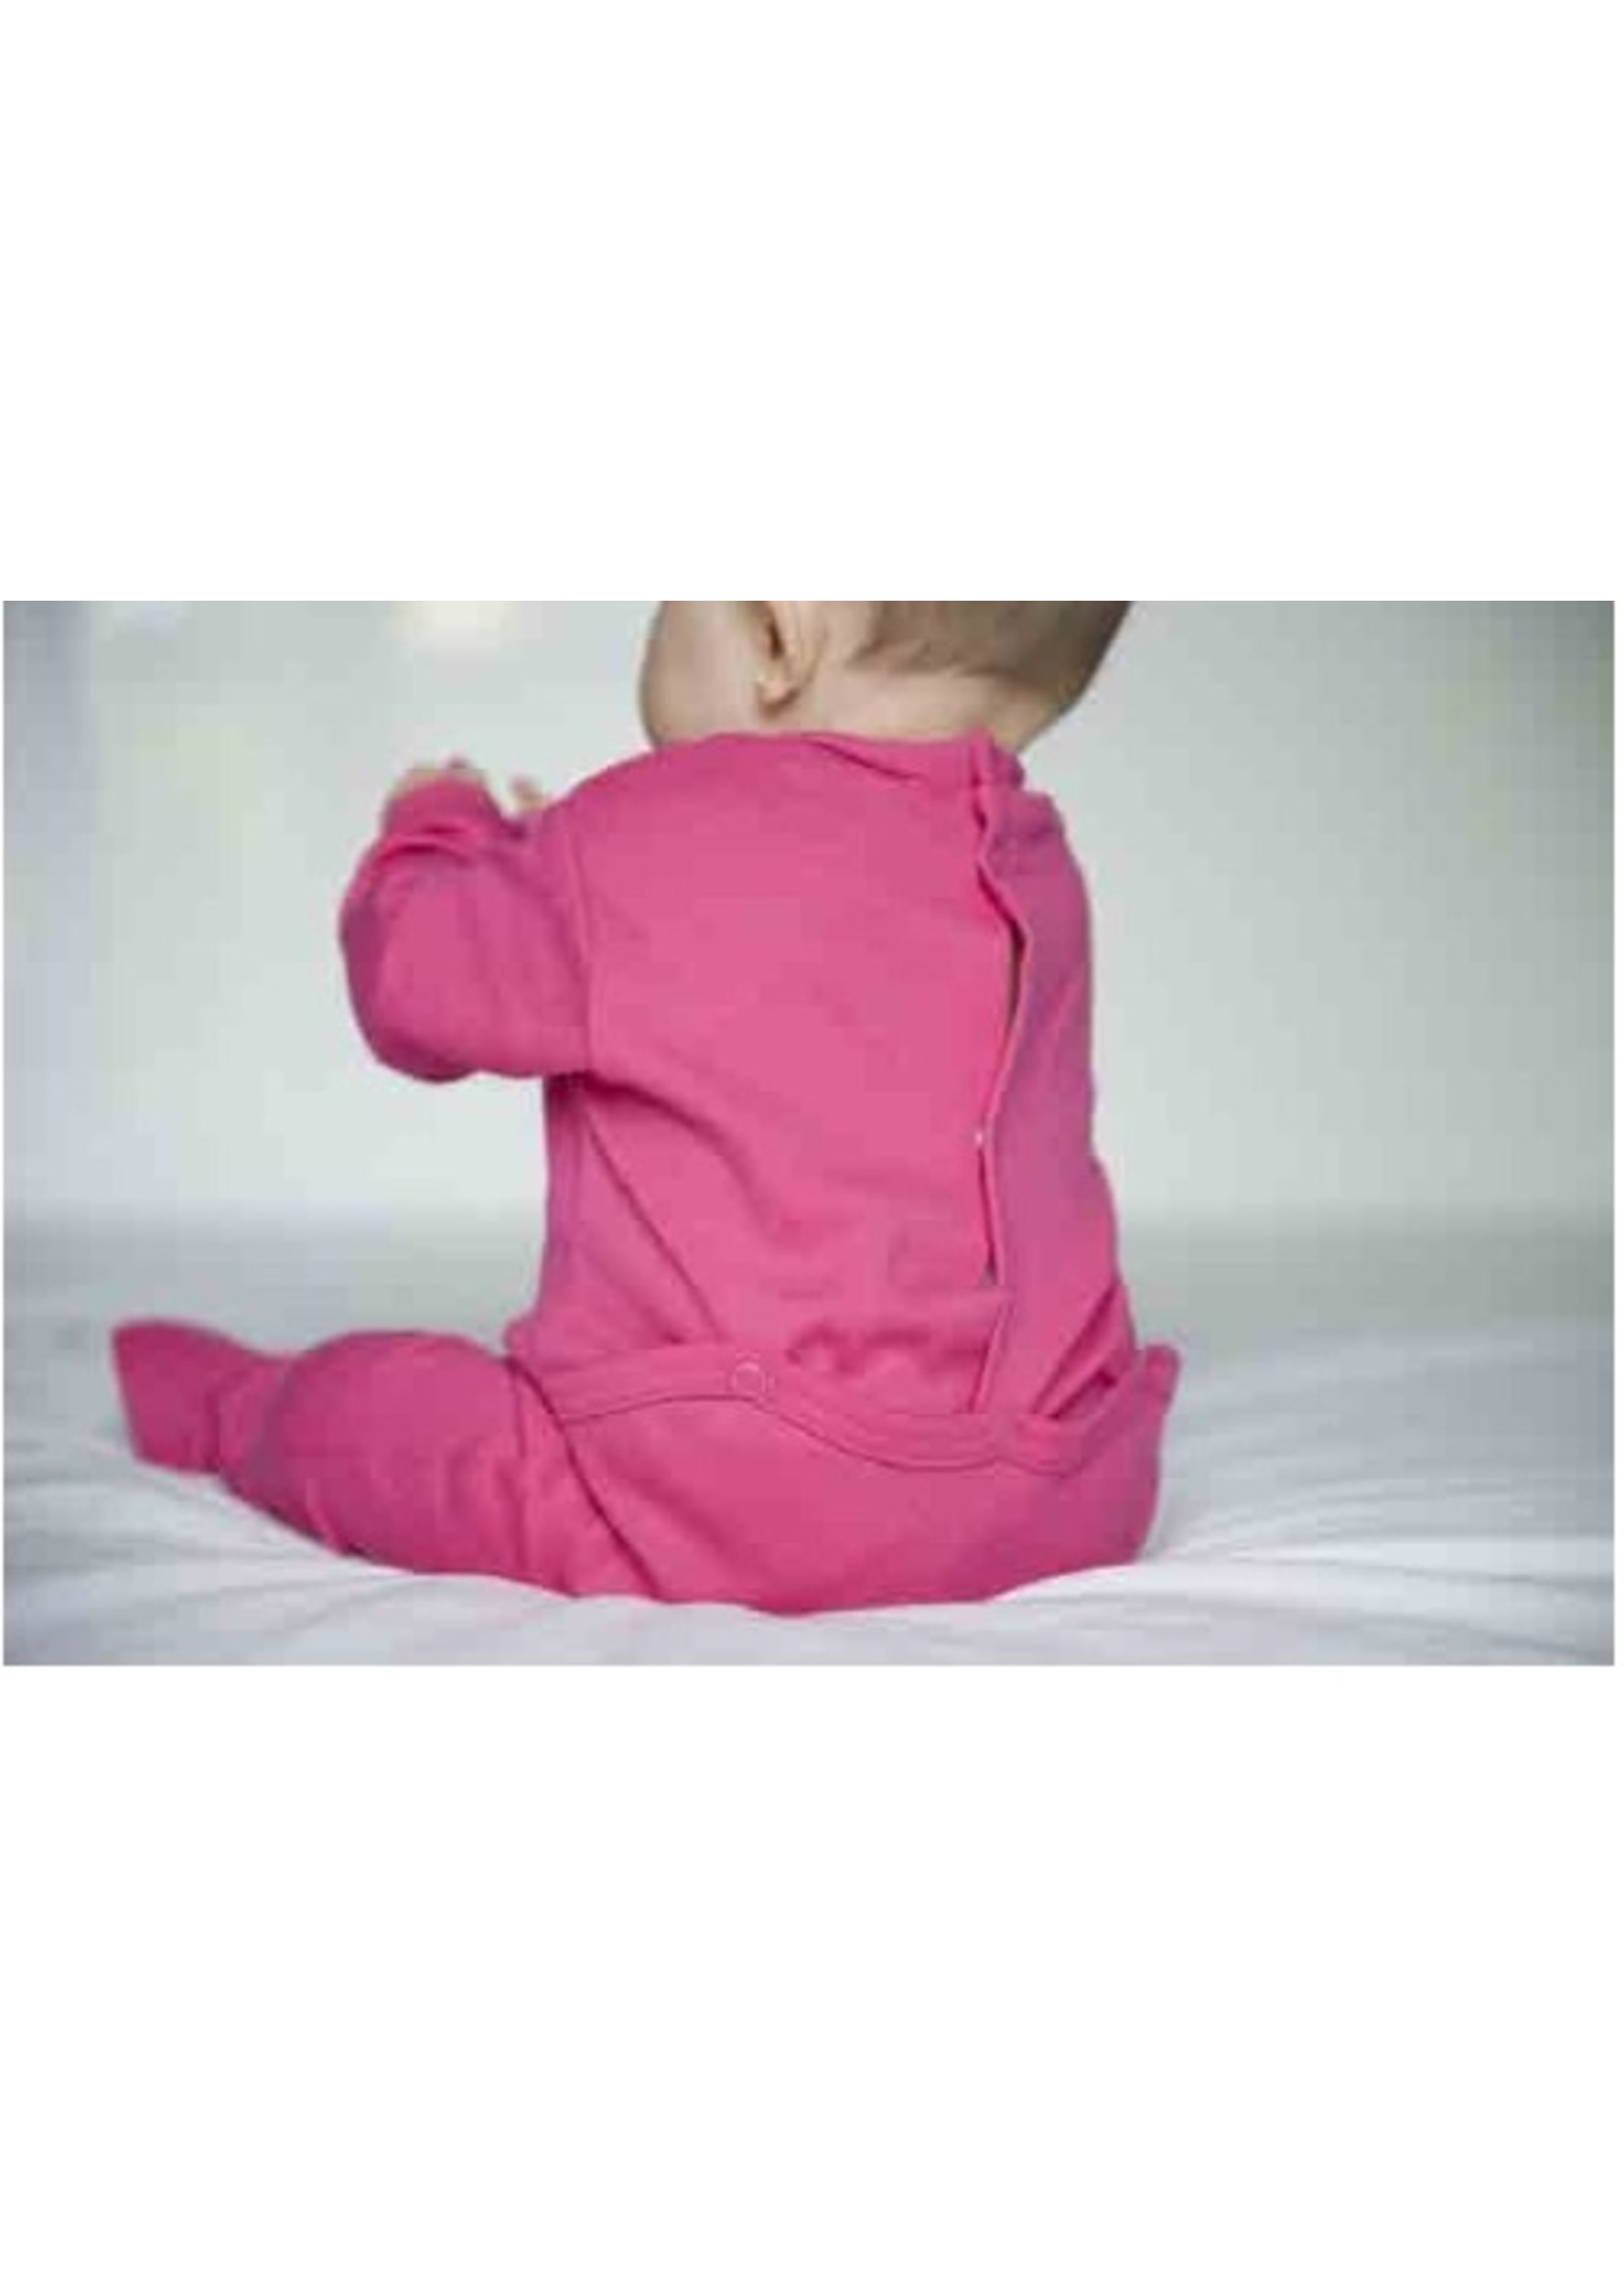 Limo basics Baby body / pyjama suit pink organic cotton